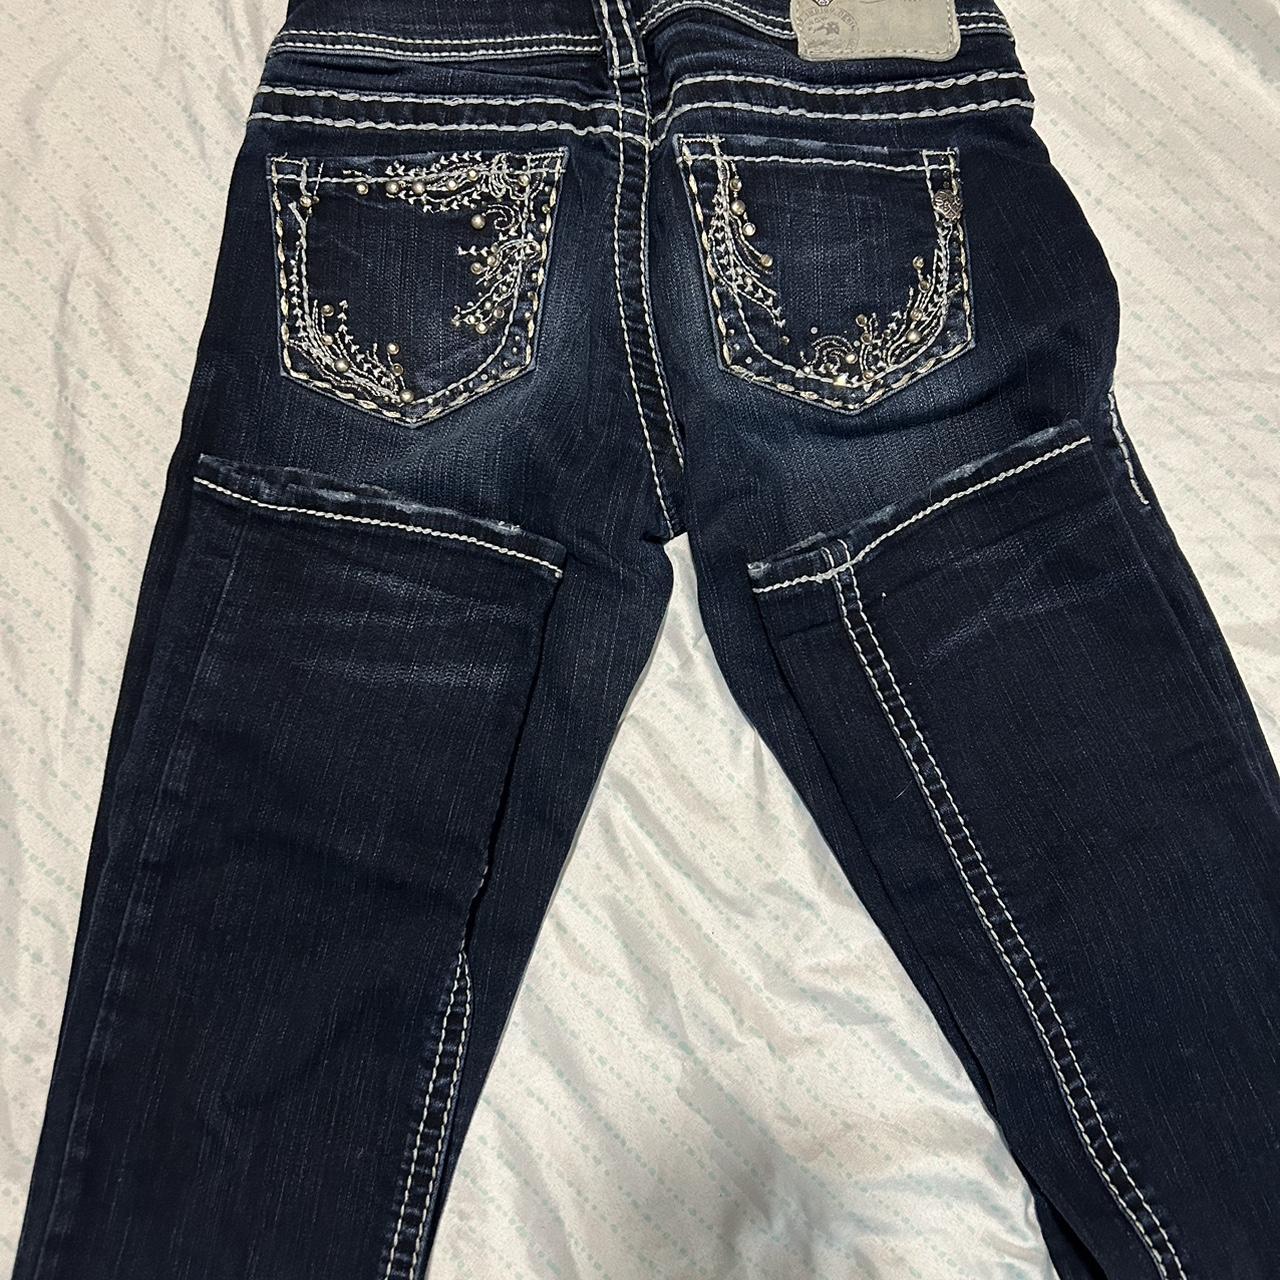 Silver Brand Jeans Straight Leg Fit - Depop